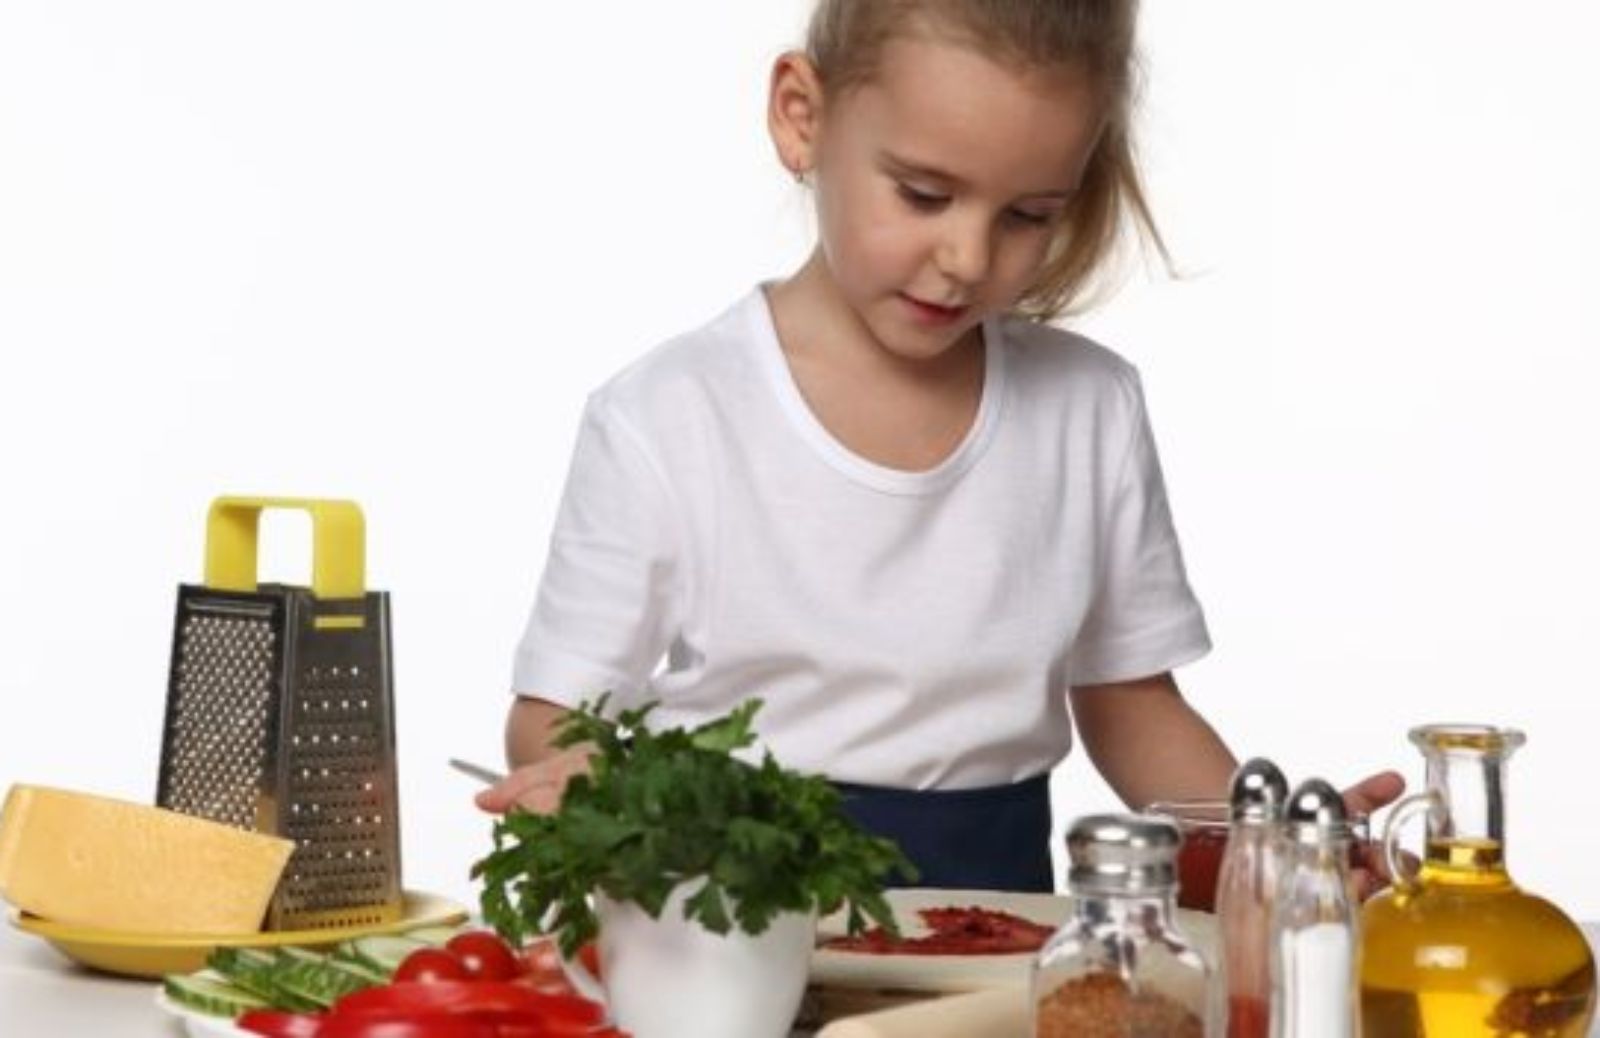 Manine in pasta: in cucina con i bambini